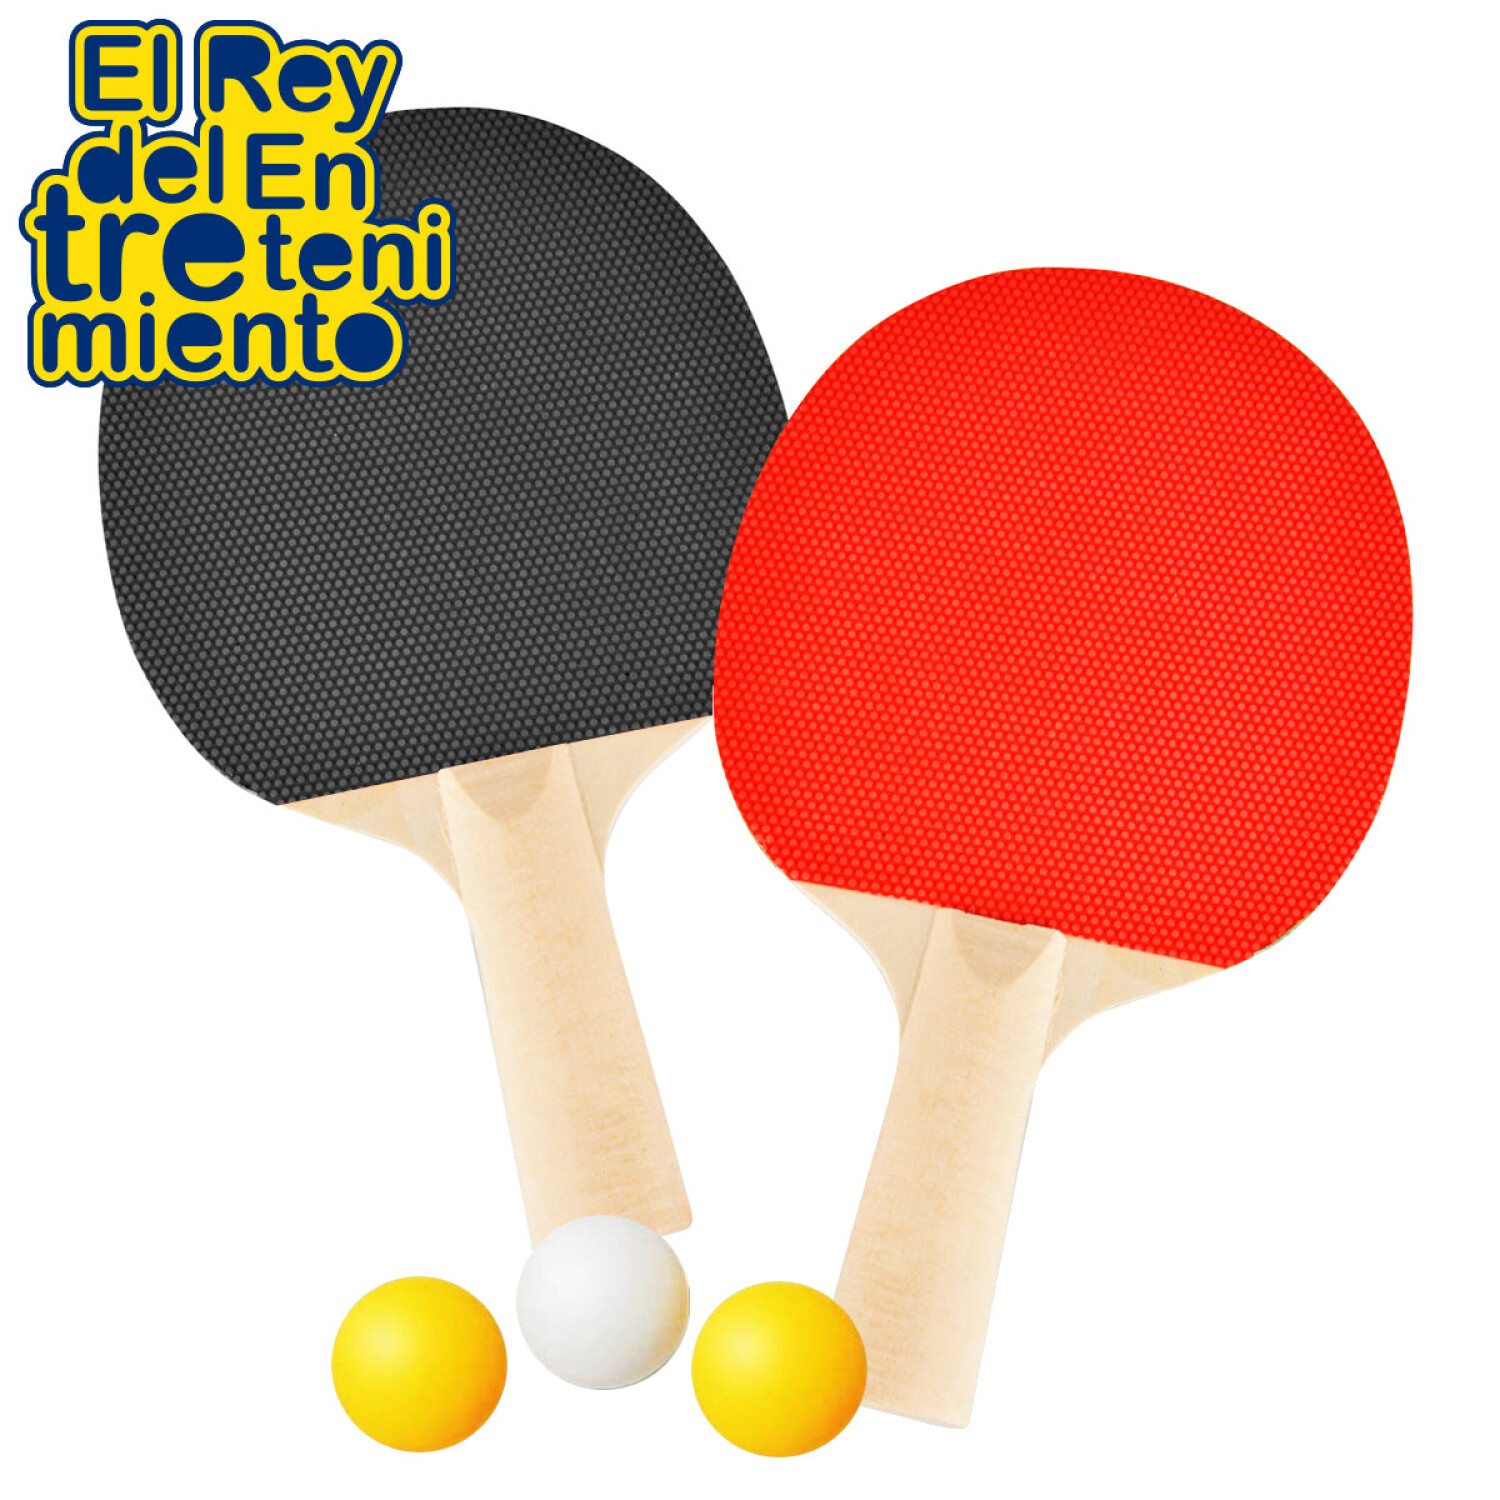 Ping Pong Kit Tenis De Mesa, Red, Soportes, Pelotas